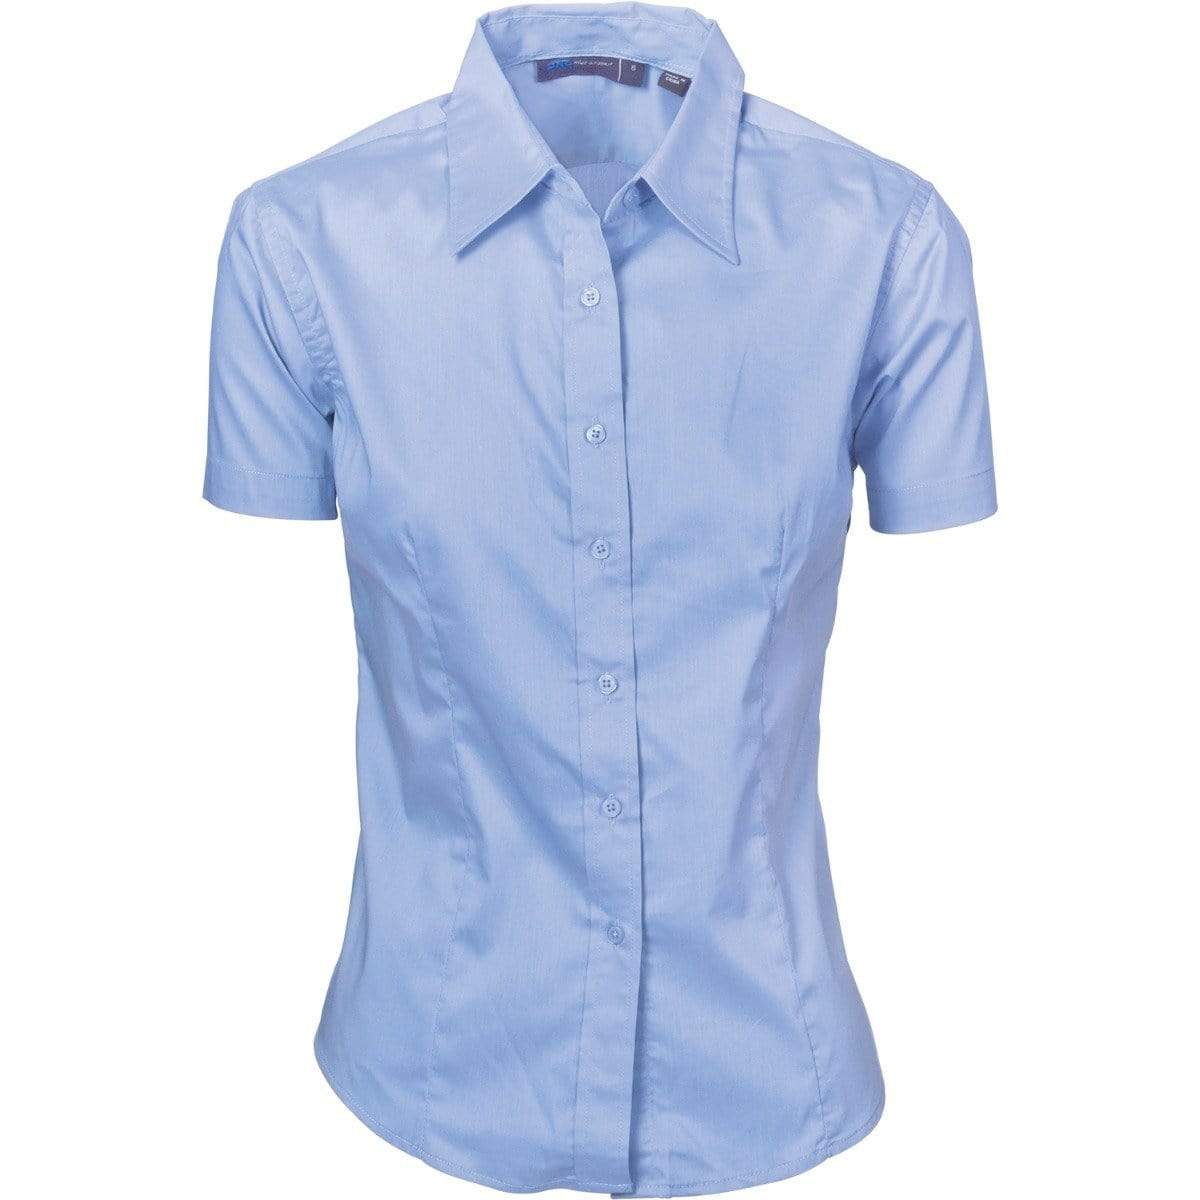 Dnc Workwear Ladies Premier Stretch Poplin Short Sleeve Business Shirt - 4231 Corporate Wear DNC Workwear Blue 6 